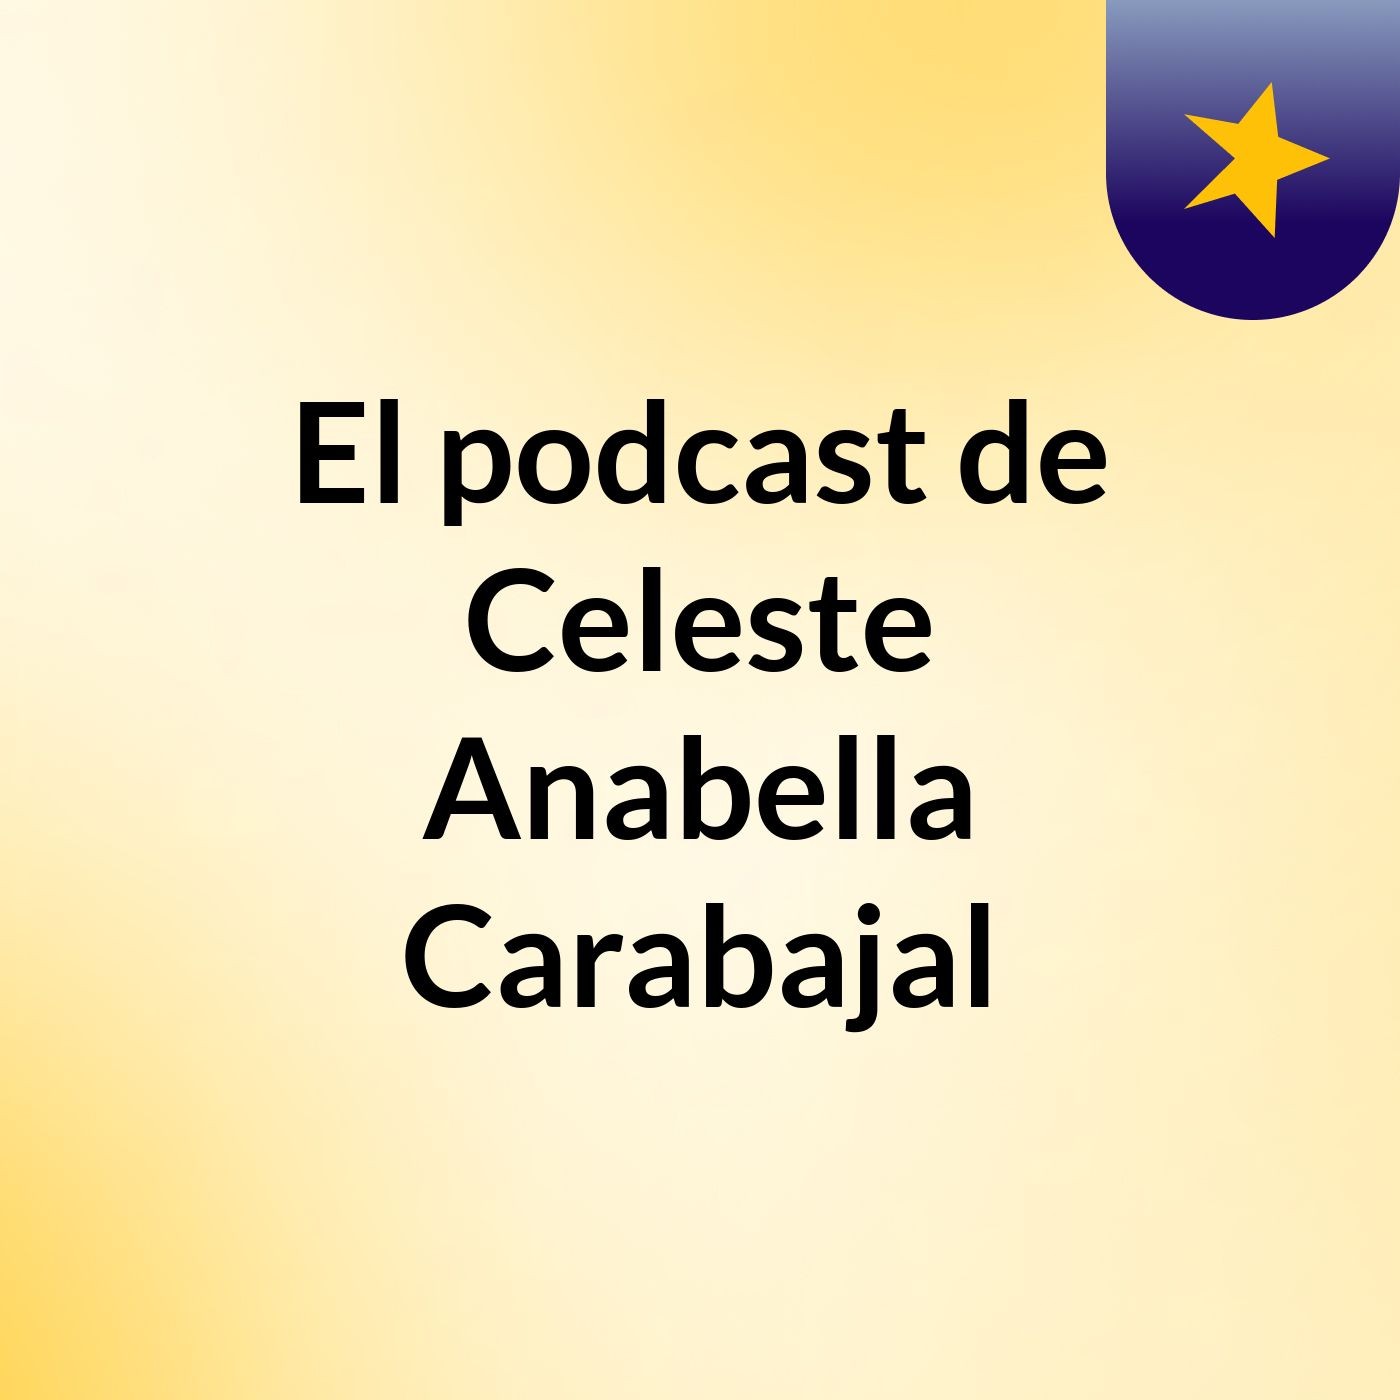 El podcast de Celeste Anabella Carabajal